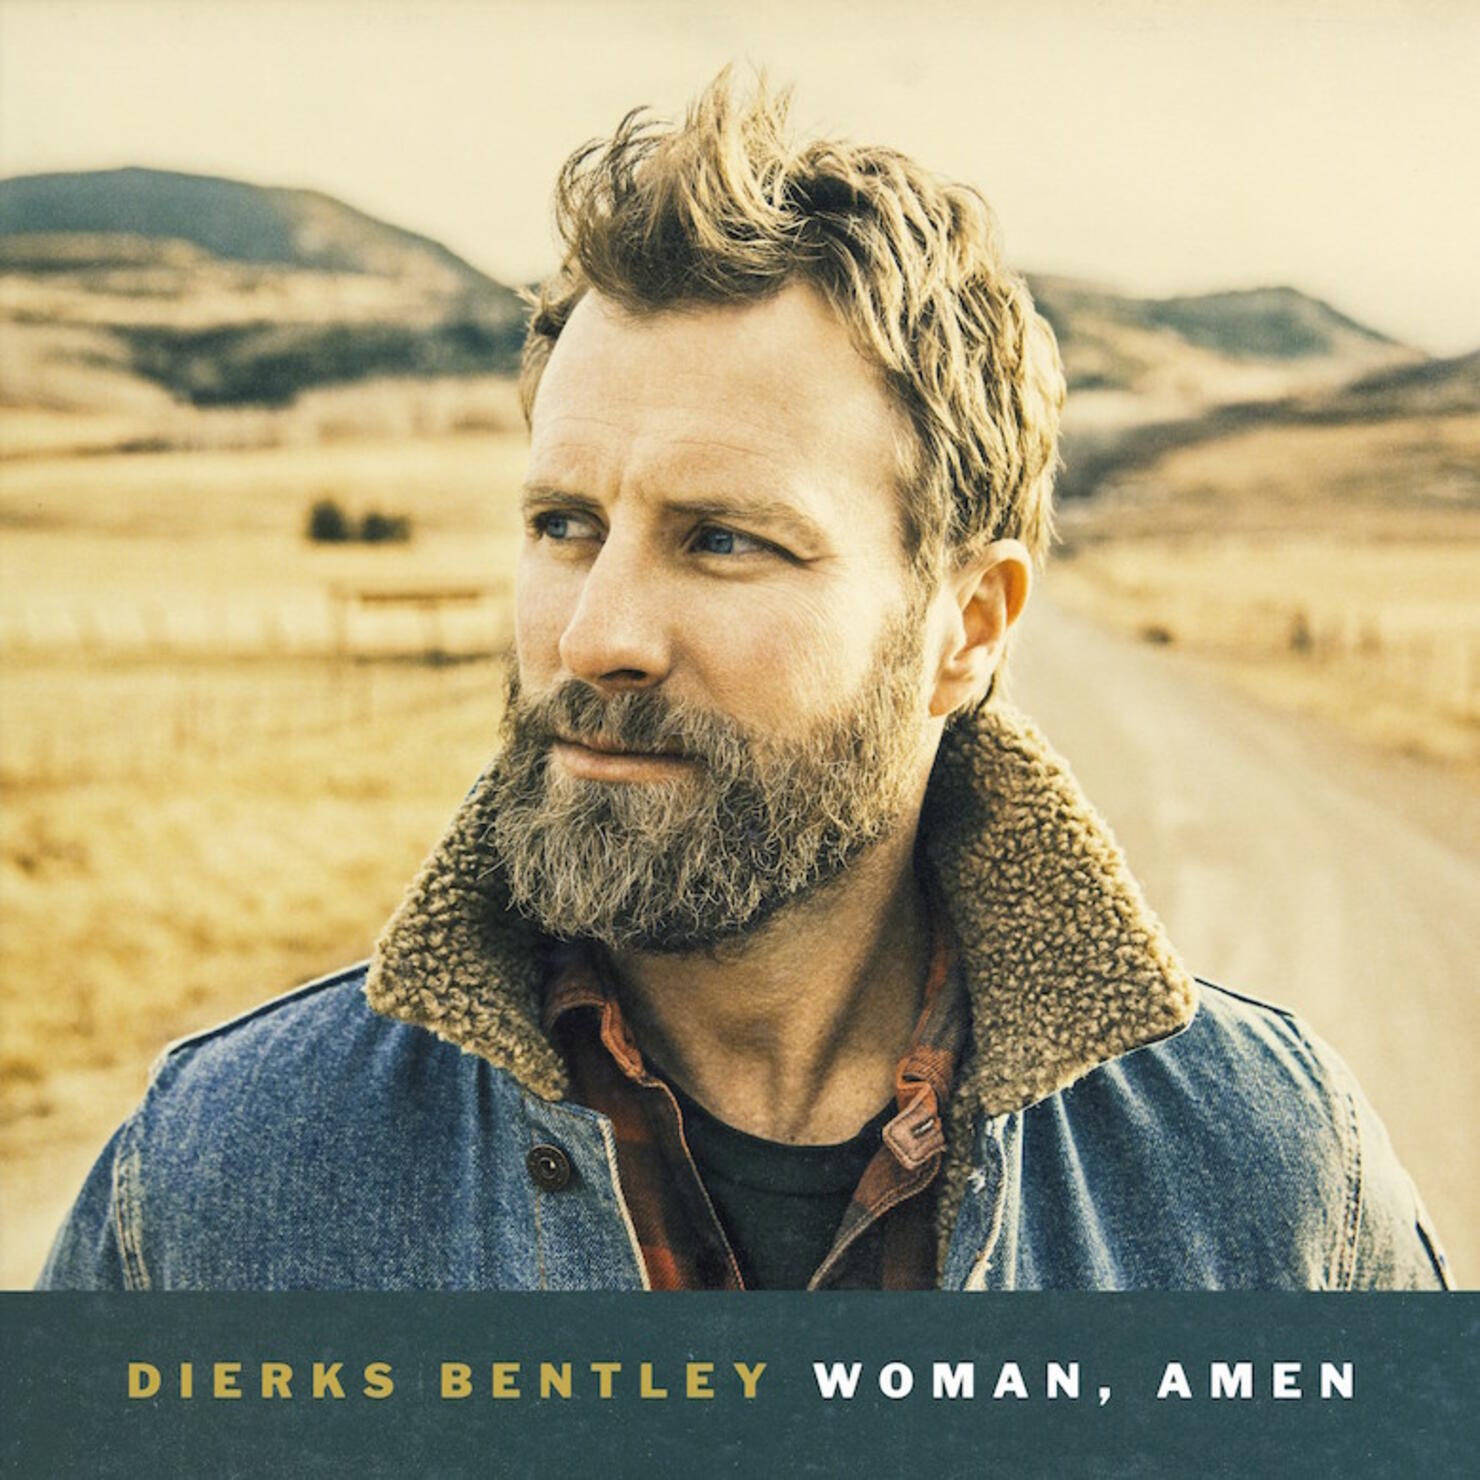 Dierks Bentley - "Woman, Amen"